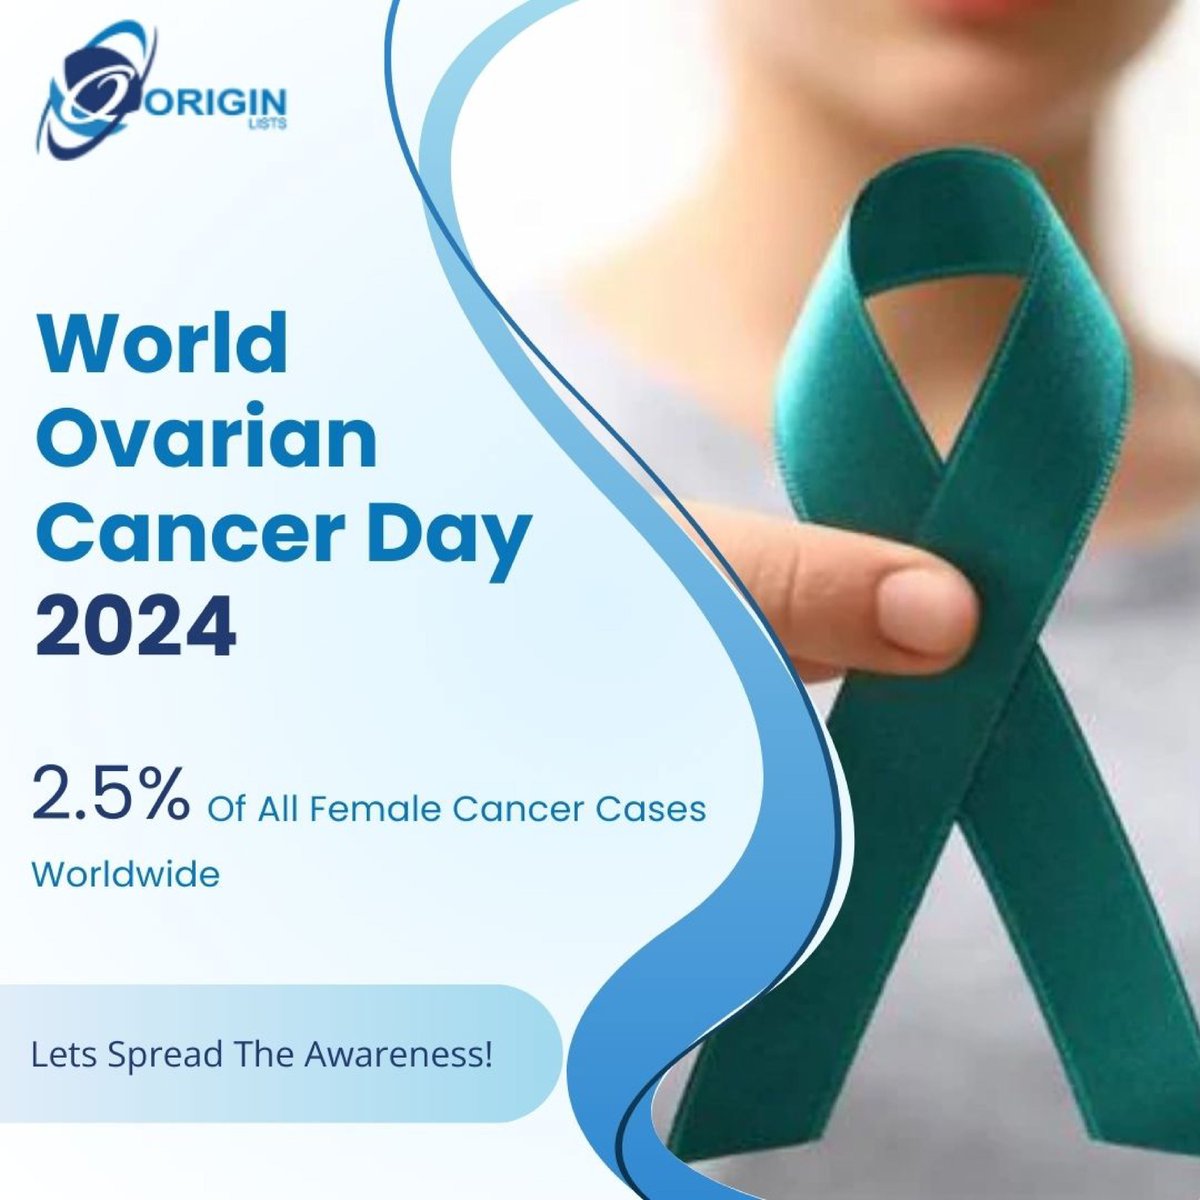 Ovarian cancer make people get depresses. Let's come together to raise awareness and make a positive change for those affected.
#ovariancance  #WOCD  #FightOvarianCancer #CancerPrevention